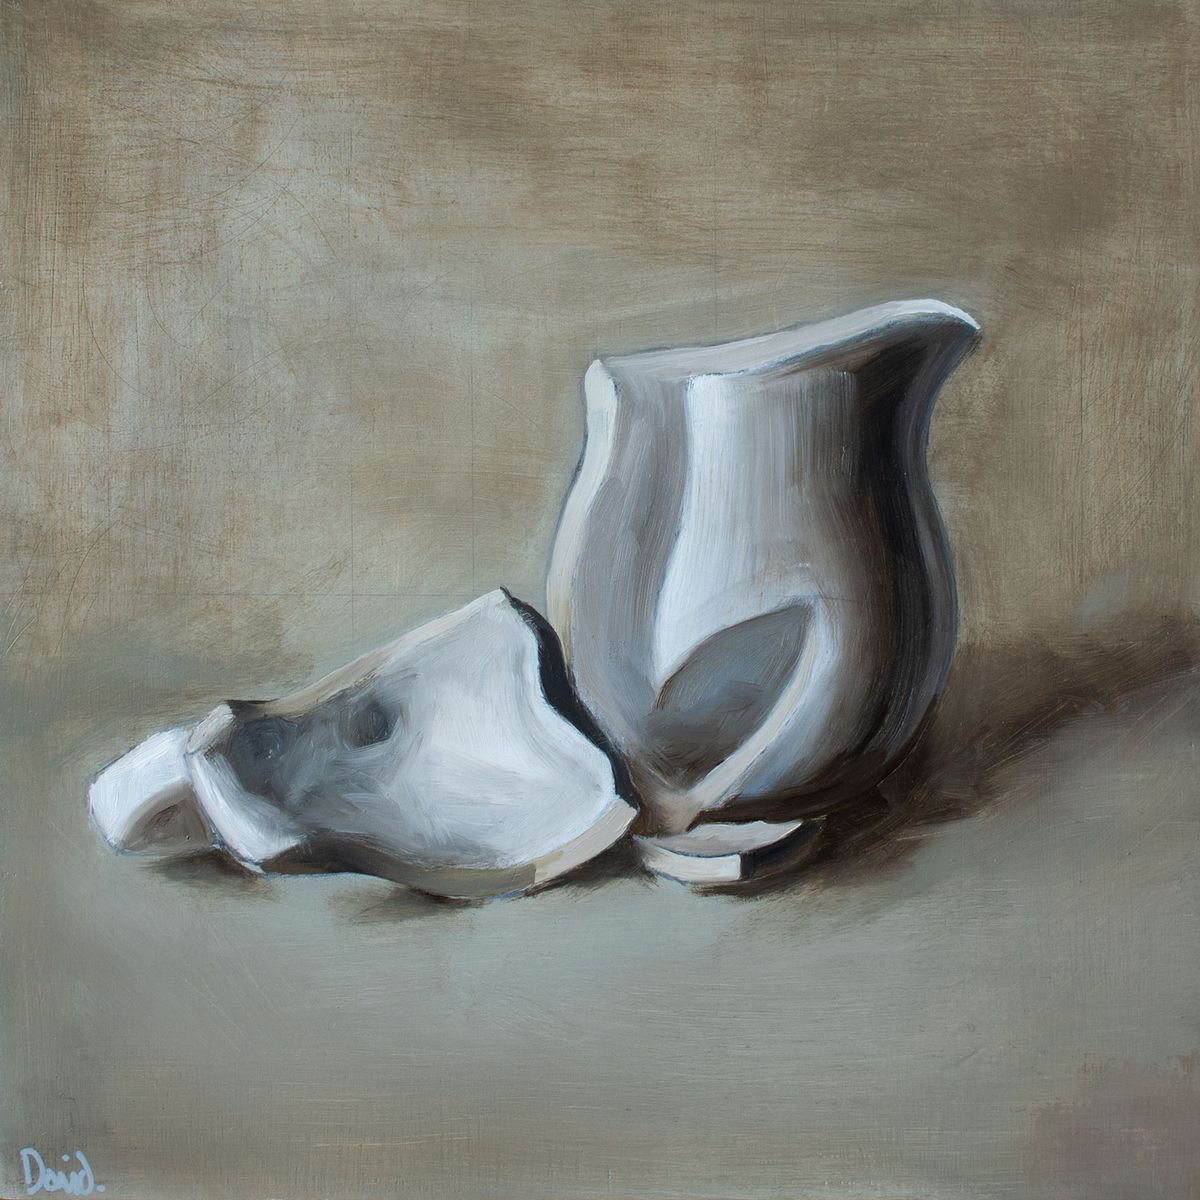 Broken IV (white jug) by David Foster